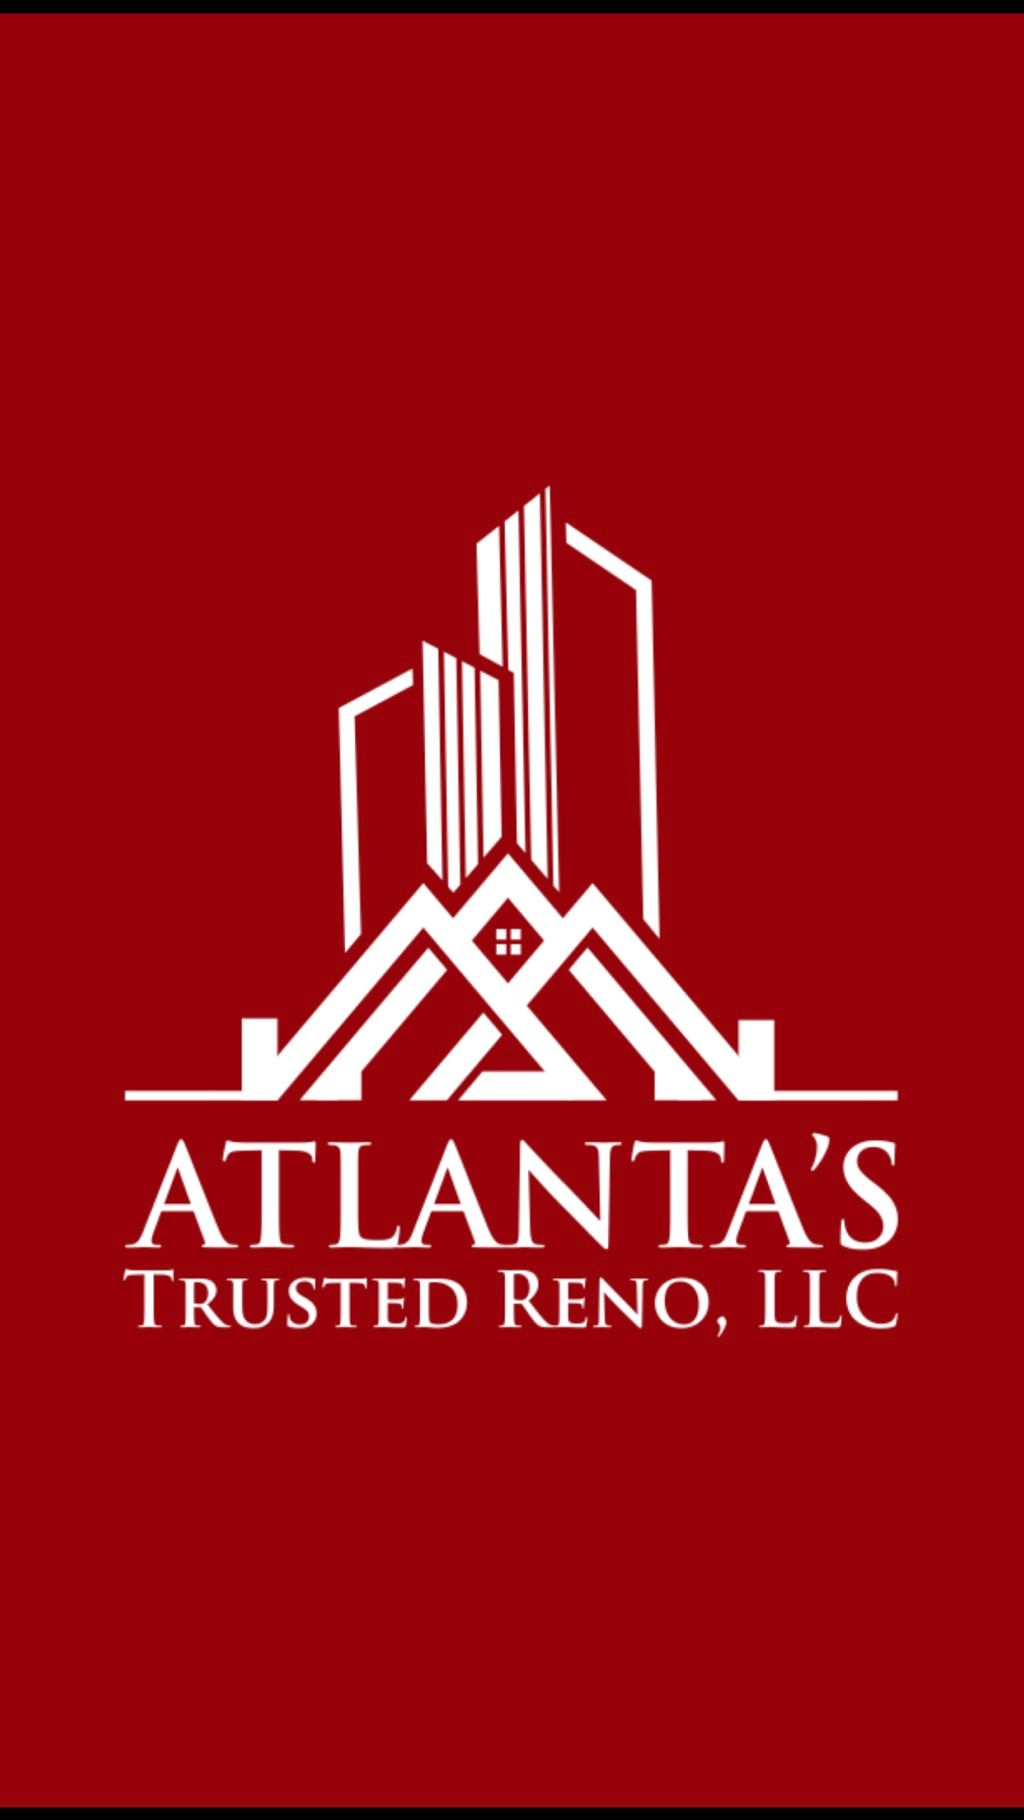 Atlanta’s Trusted Renovations, LLC